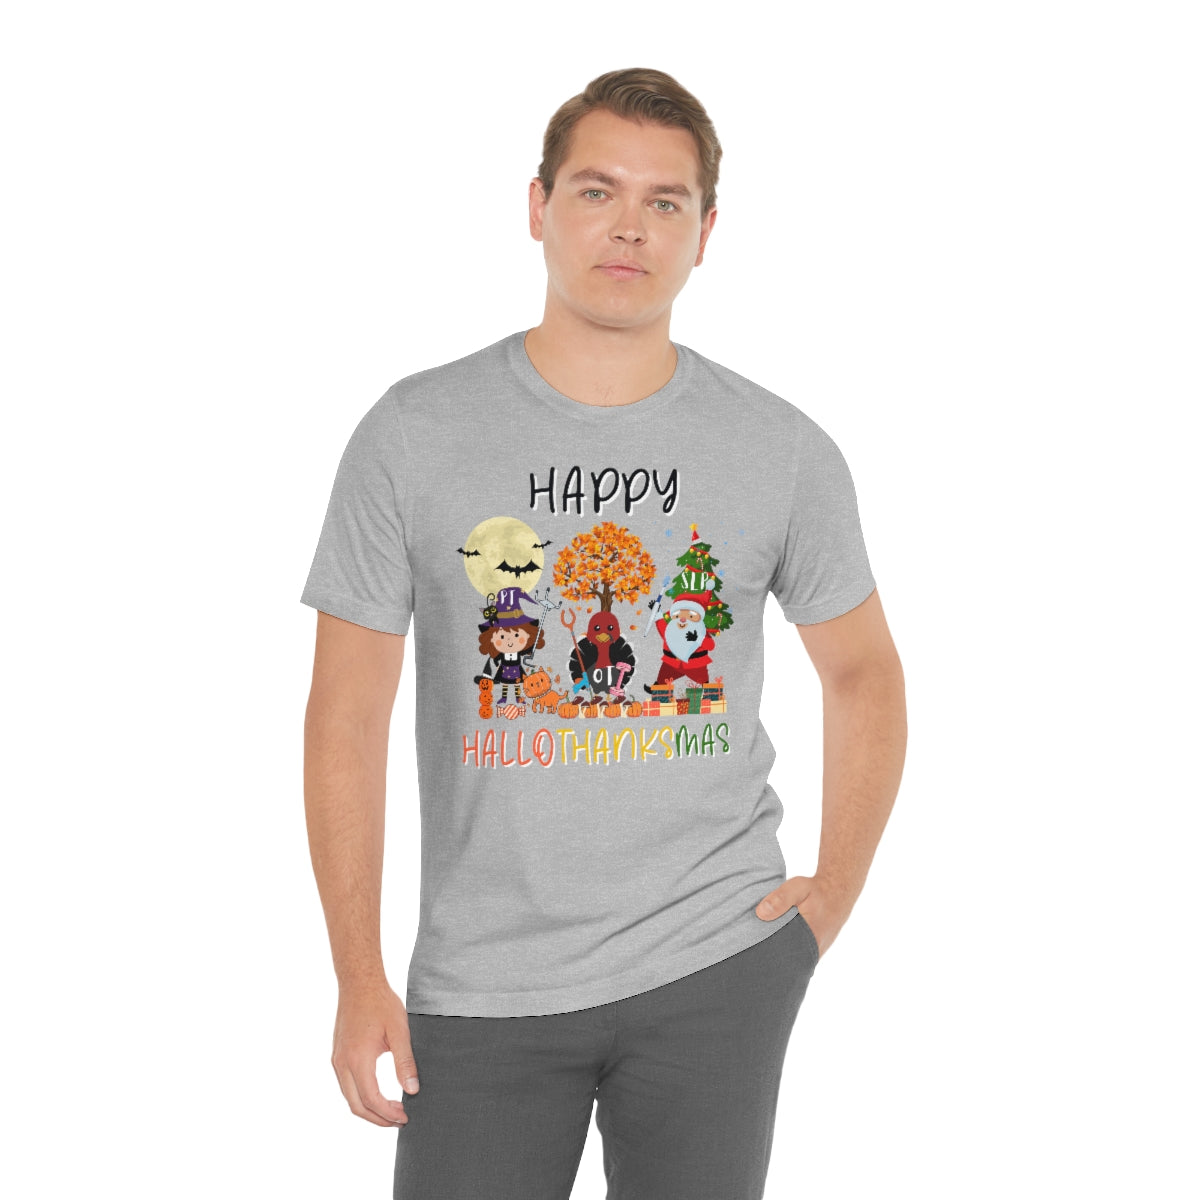 Happy Hallowthanksmas Therapy Team Shirt Fall Thanksgiving Tee